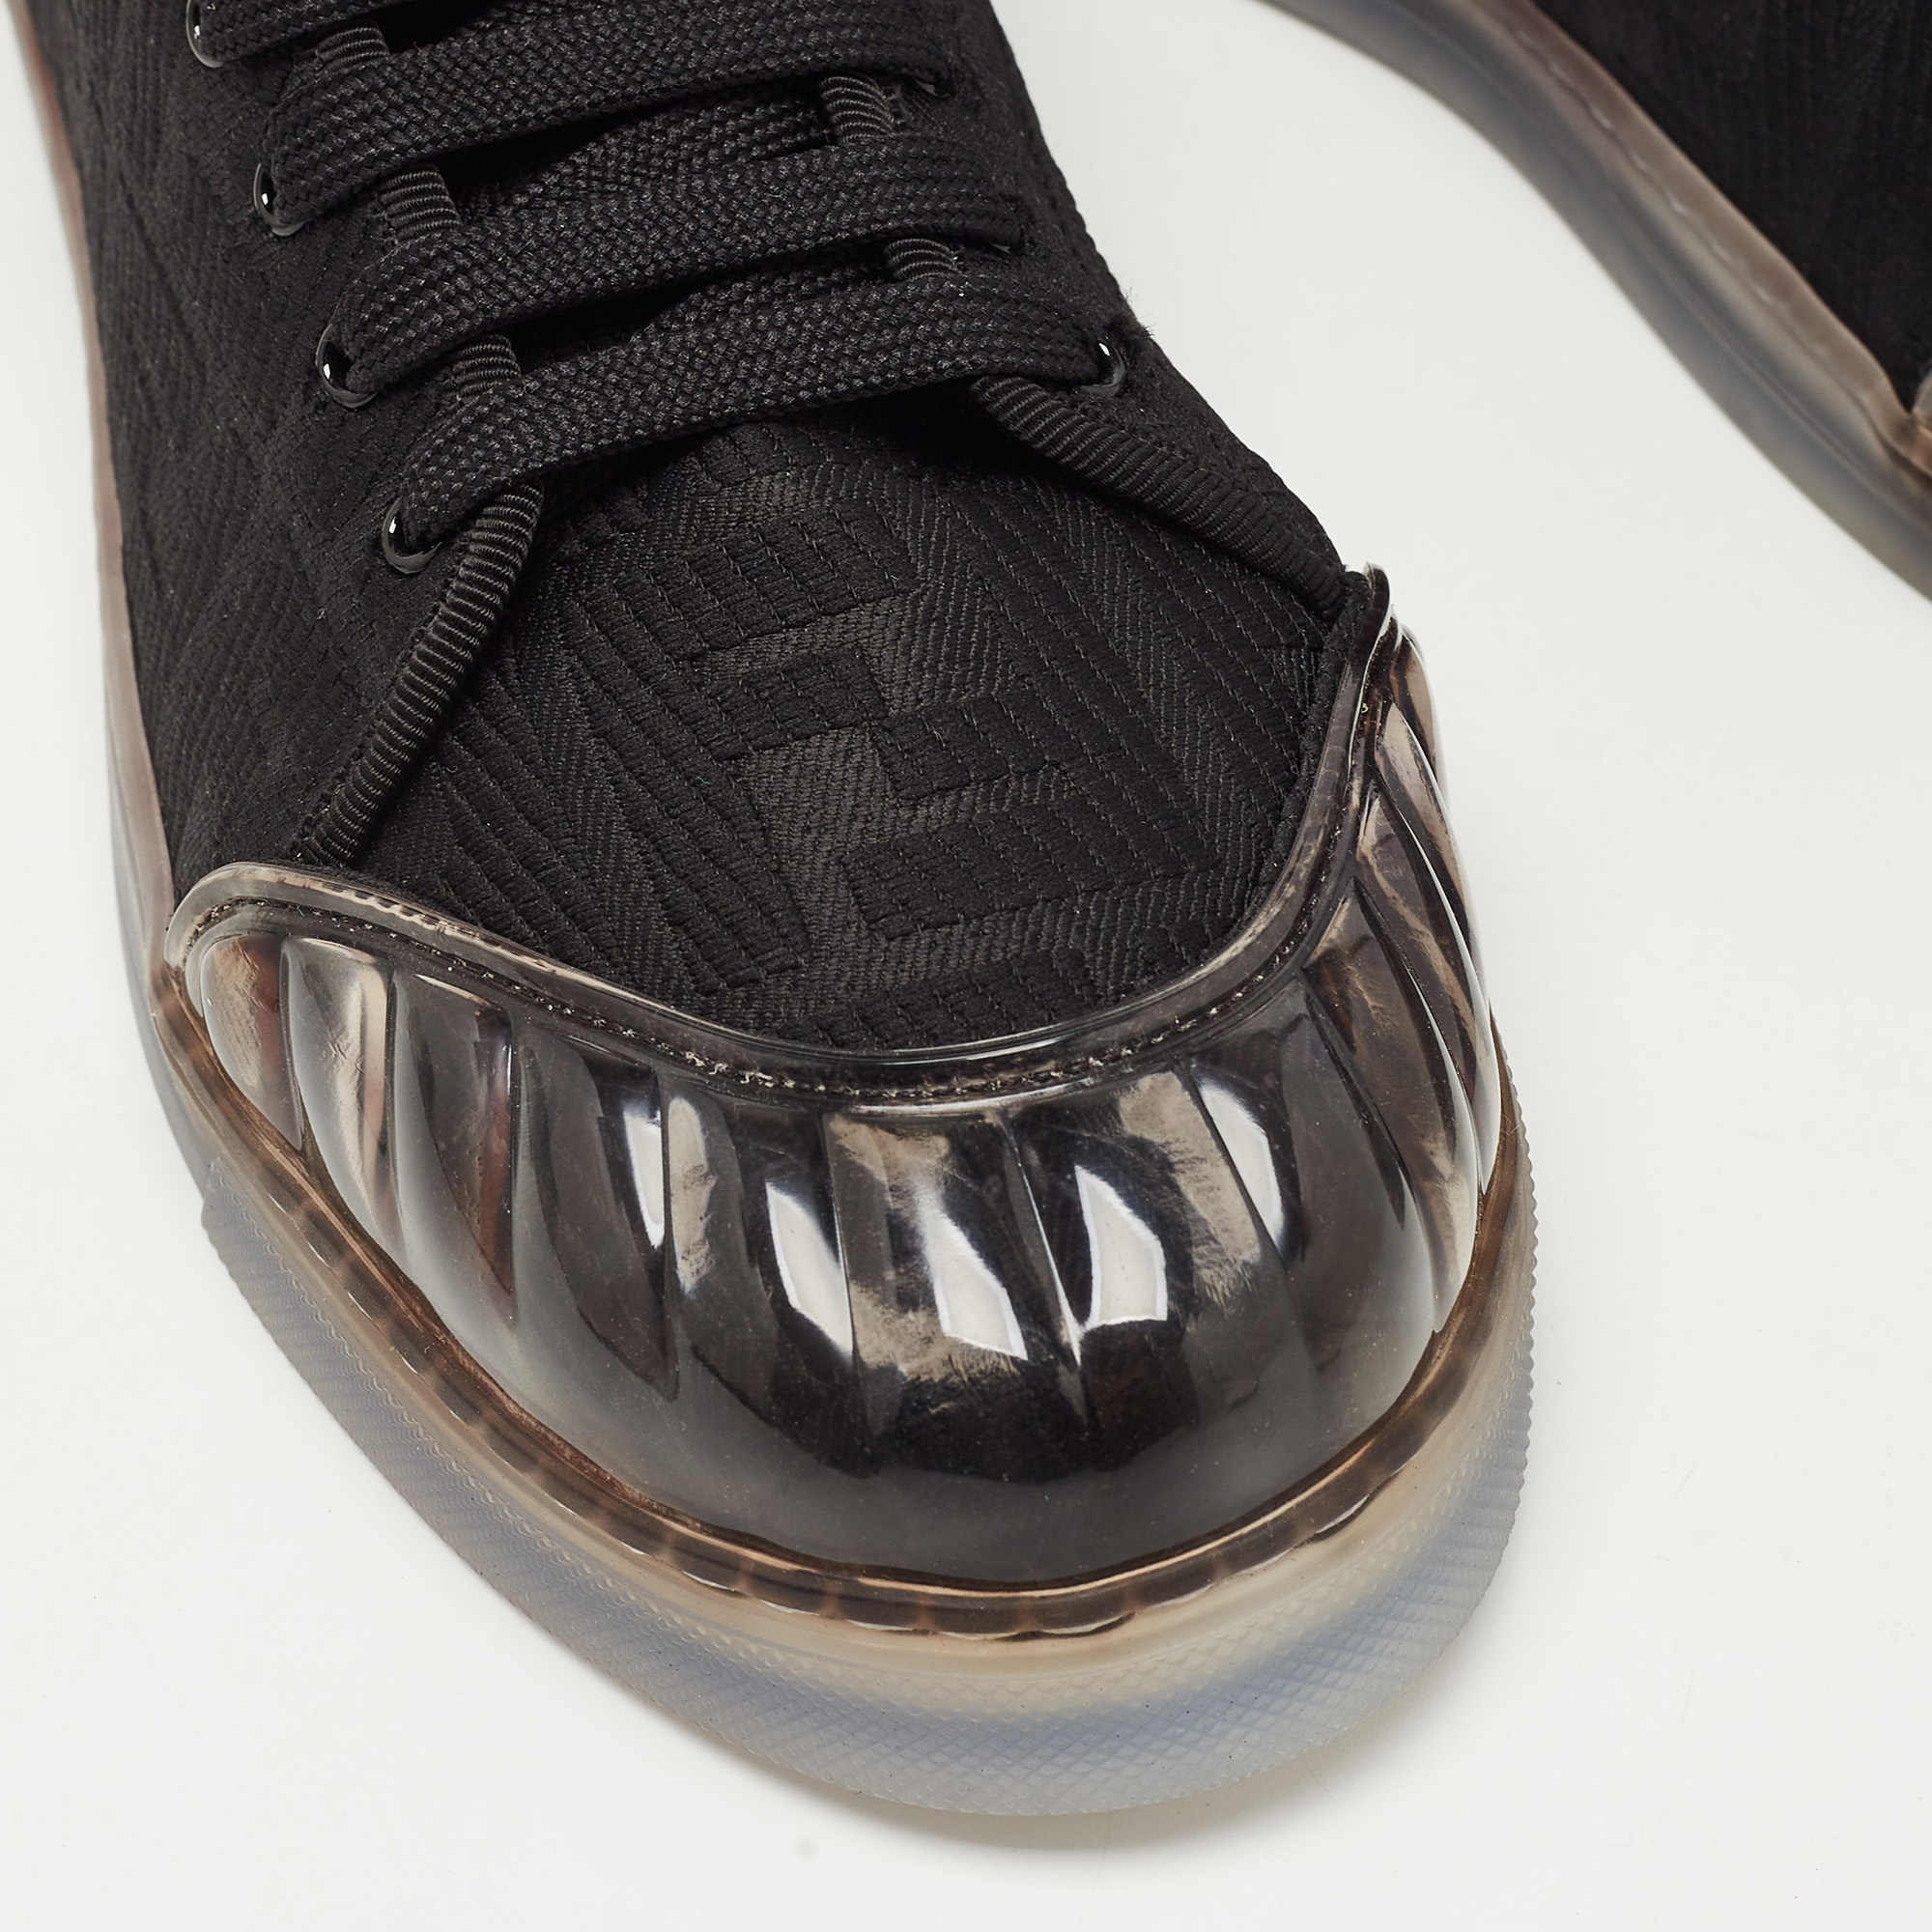 Fendi Black Canvas And PVC FF Logo Low-Top Sneakers Size 41